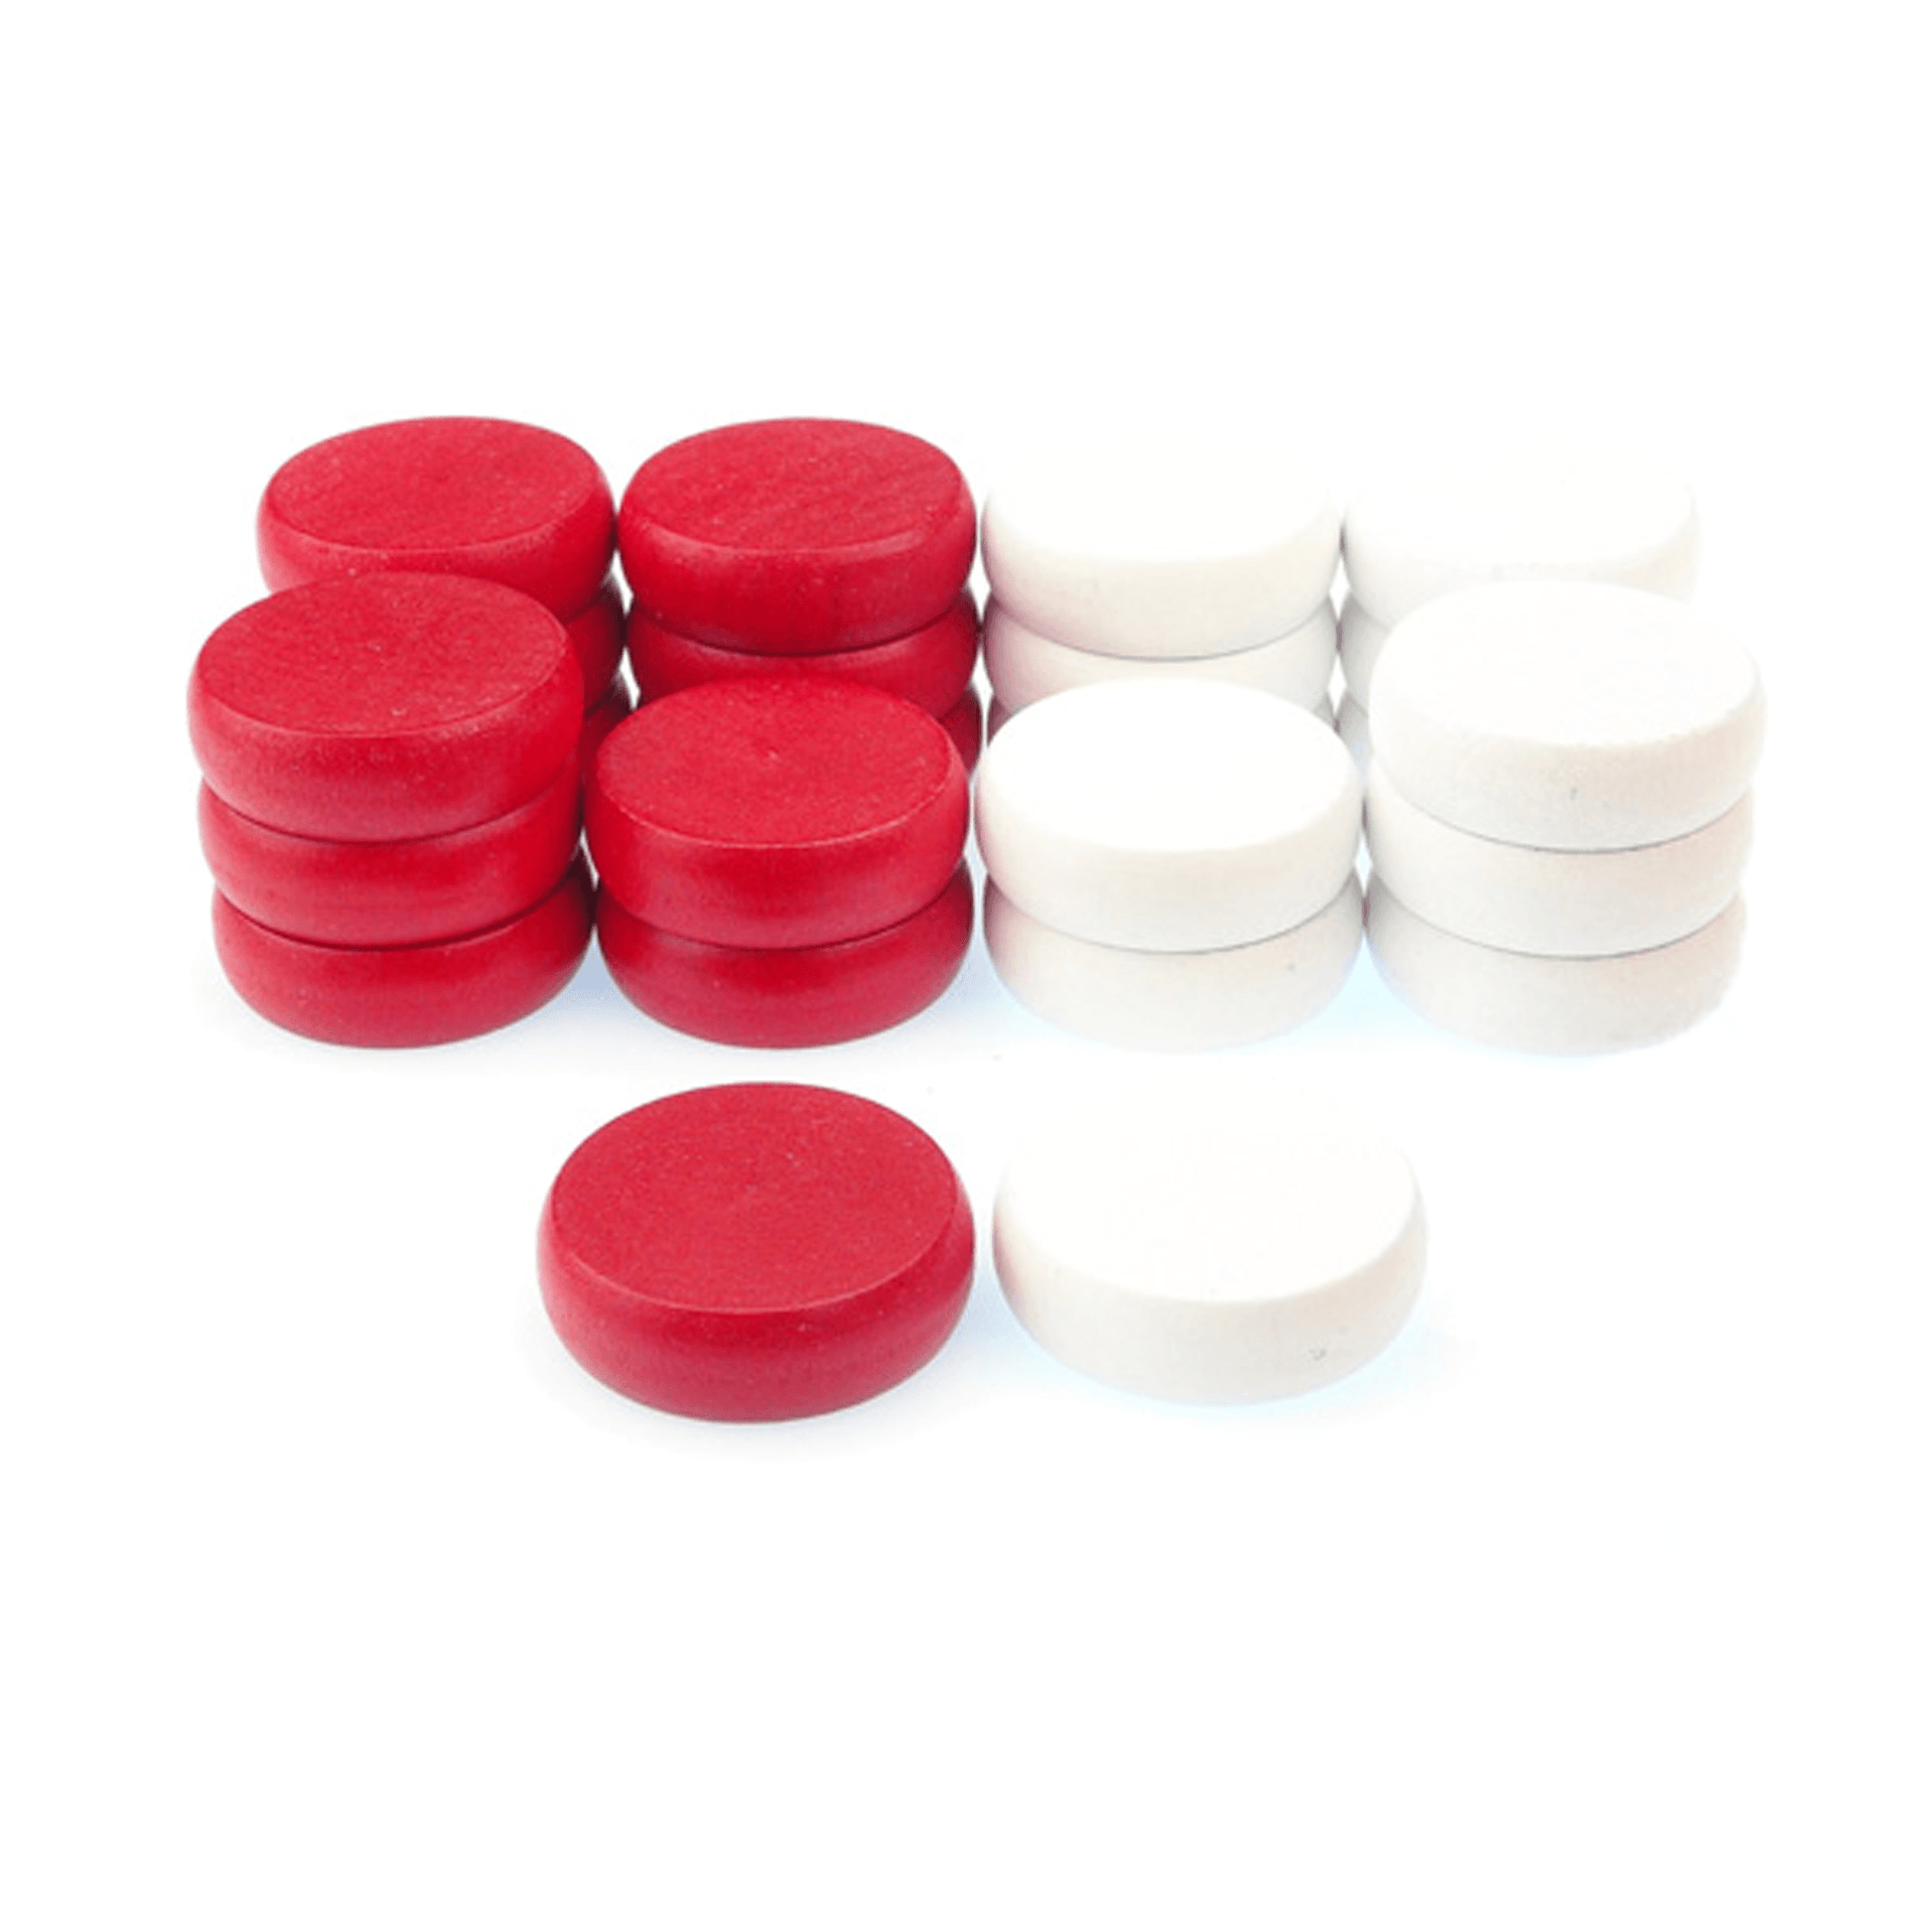 26-red-white-crokinole tournament discs